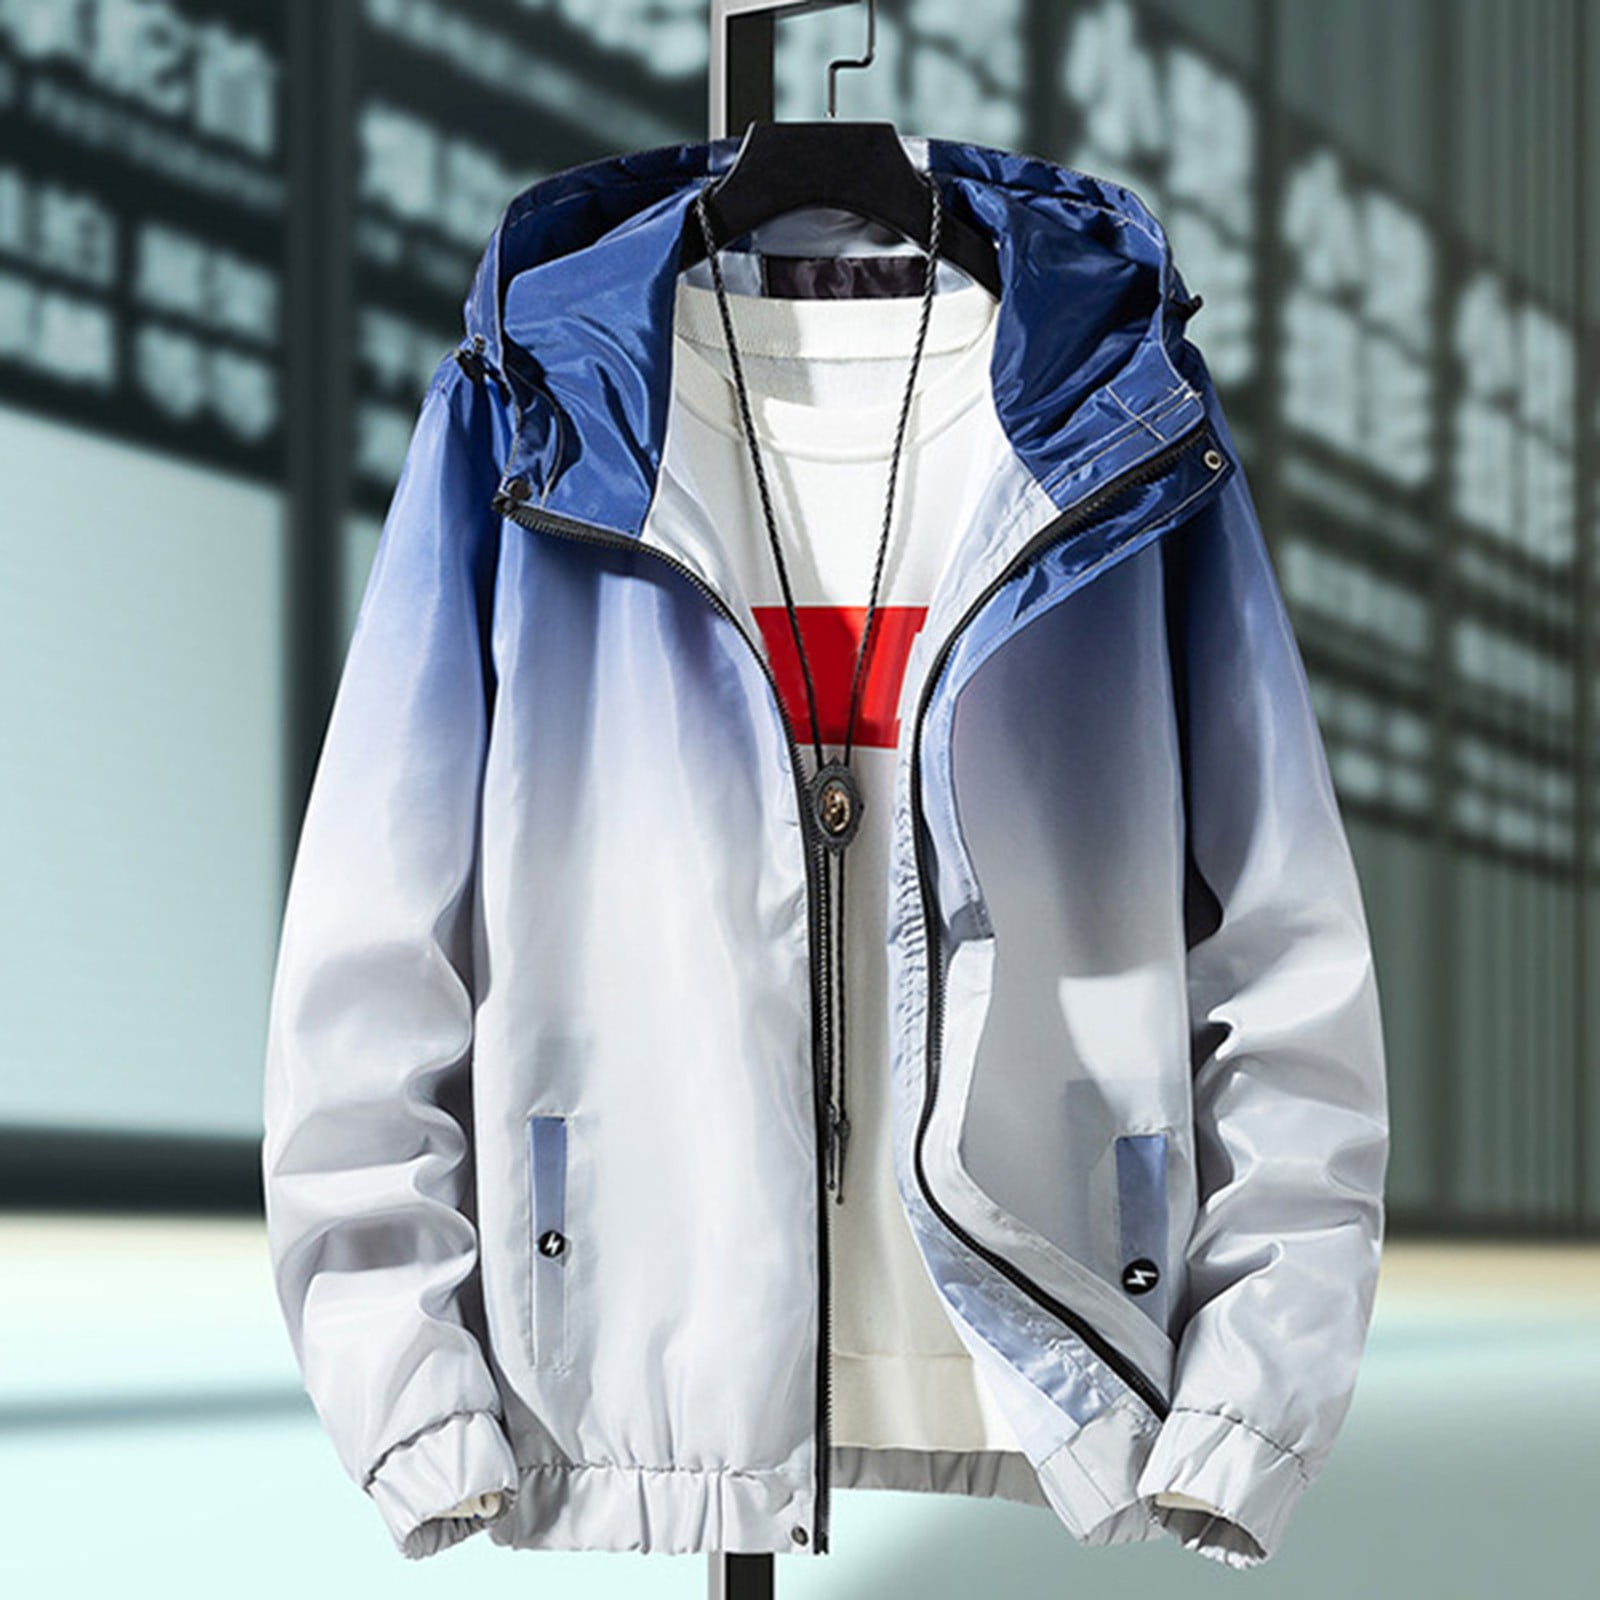 LEEy-world Winter Jackets For Men Men's Tactical Jacket Lined Soft Shell Winter  Jacket Lightweight Water Resistant Coats Outwear Grey,XL 